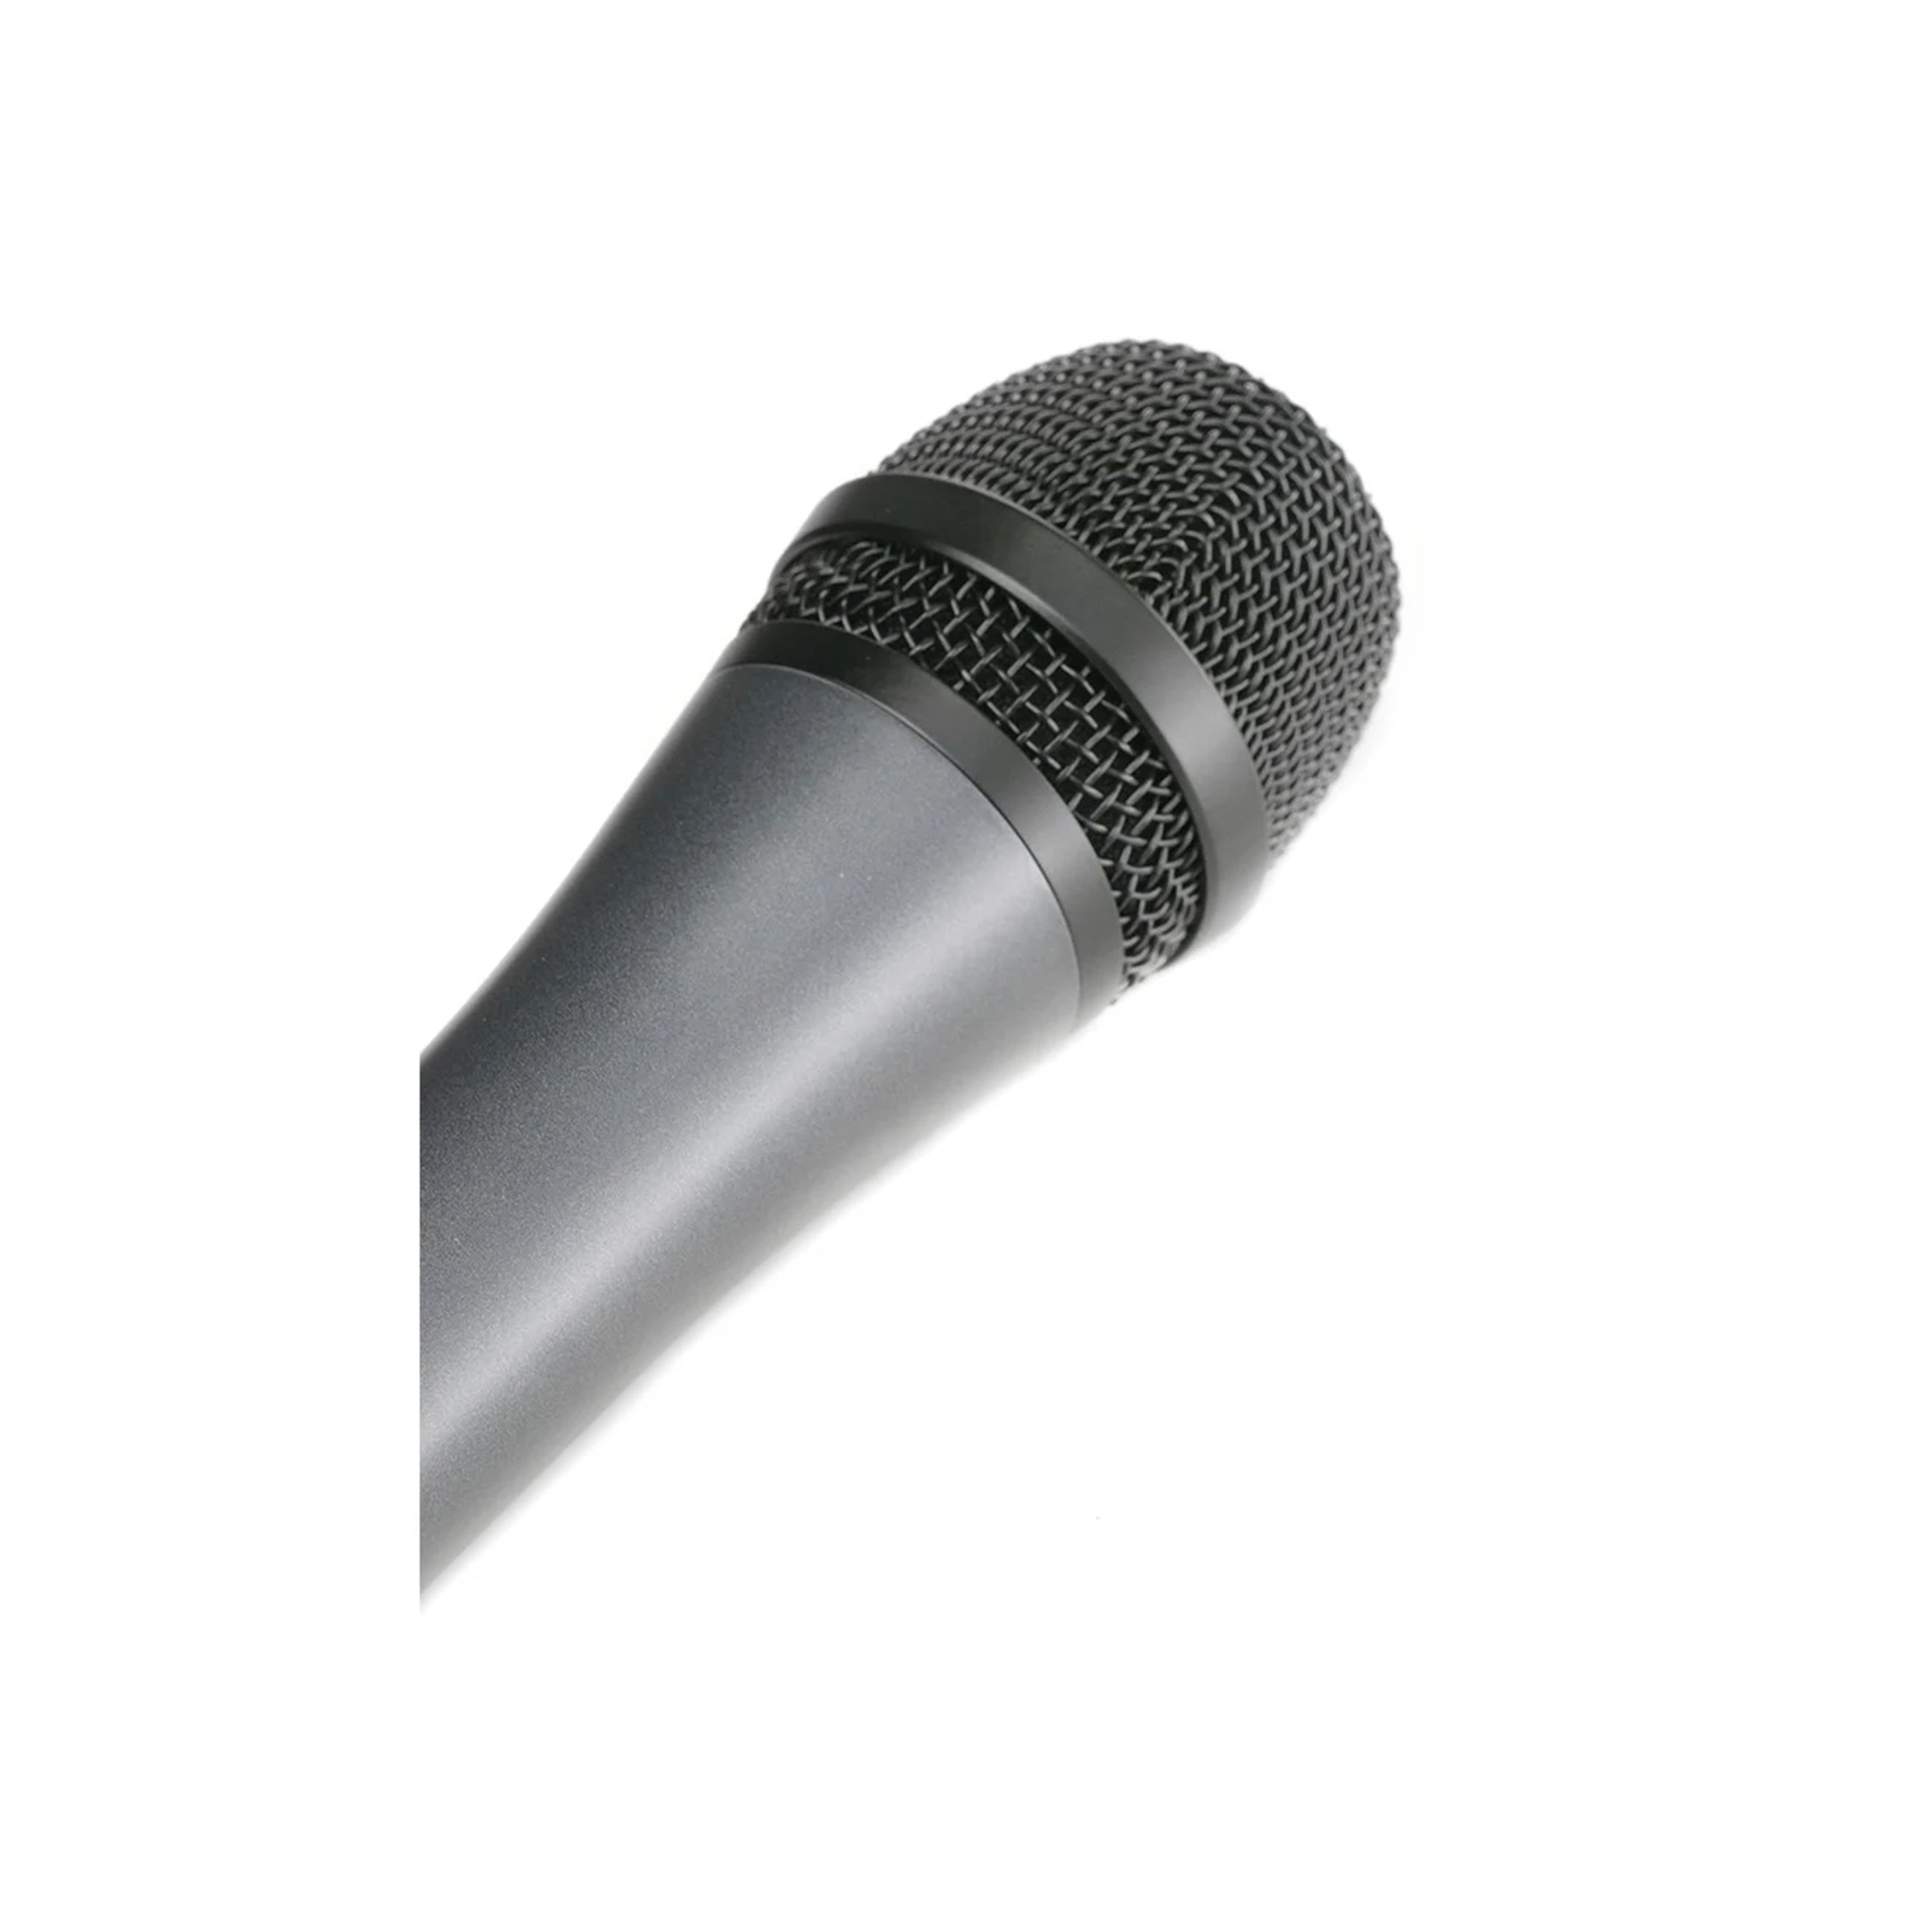 Sennheiser Dynamic Cardioid Vocal Microphone - E835